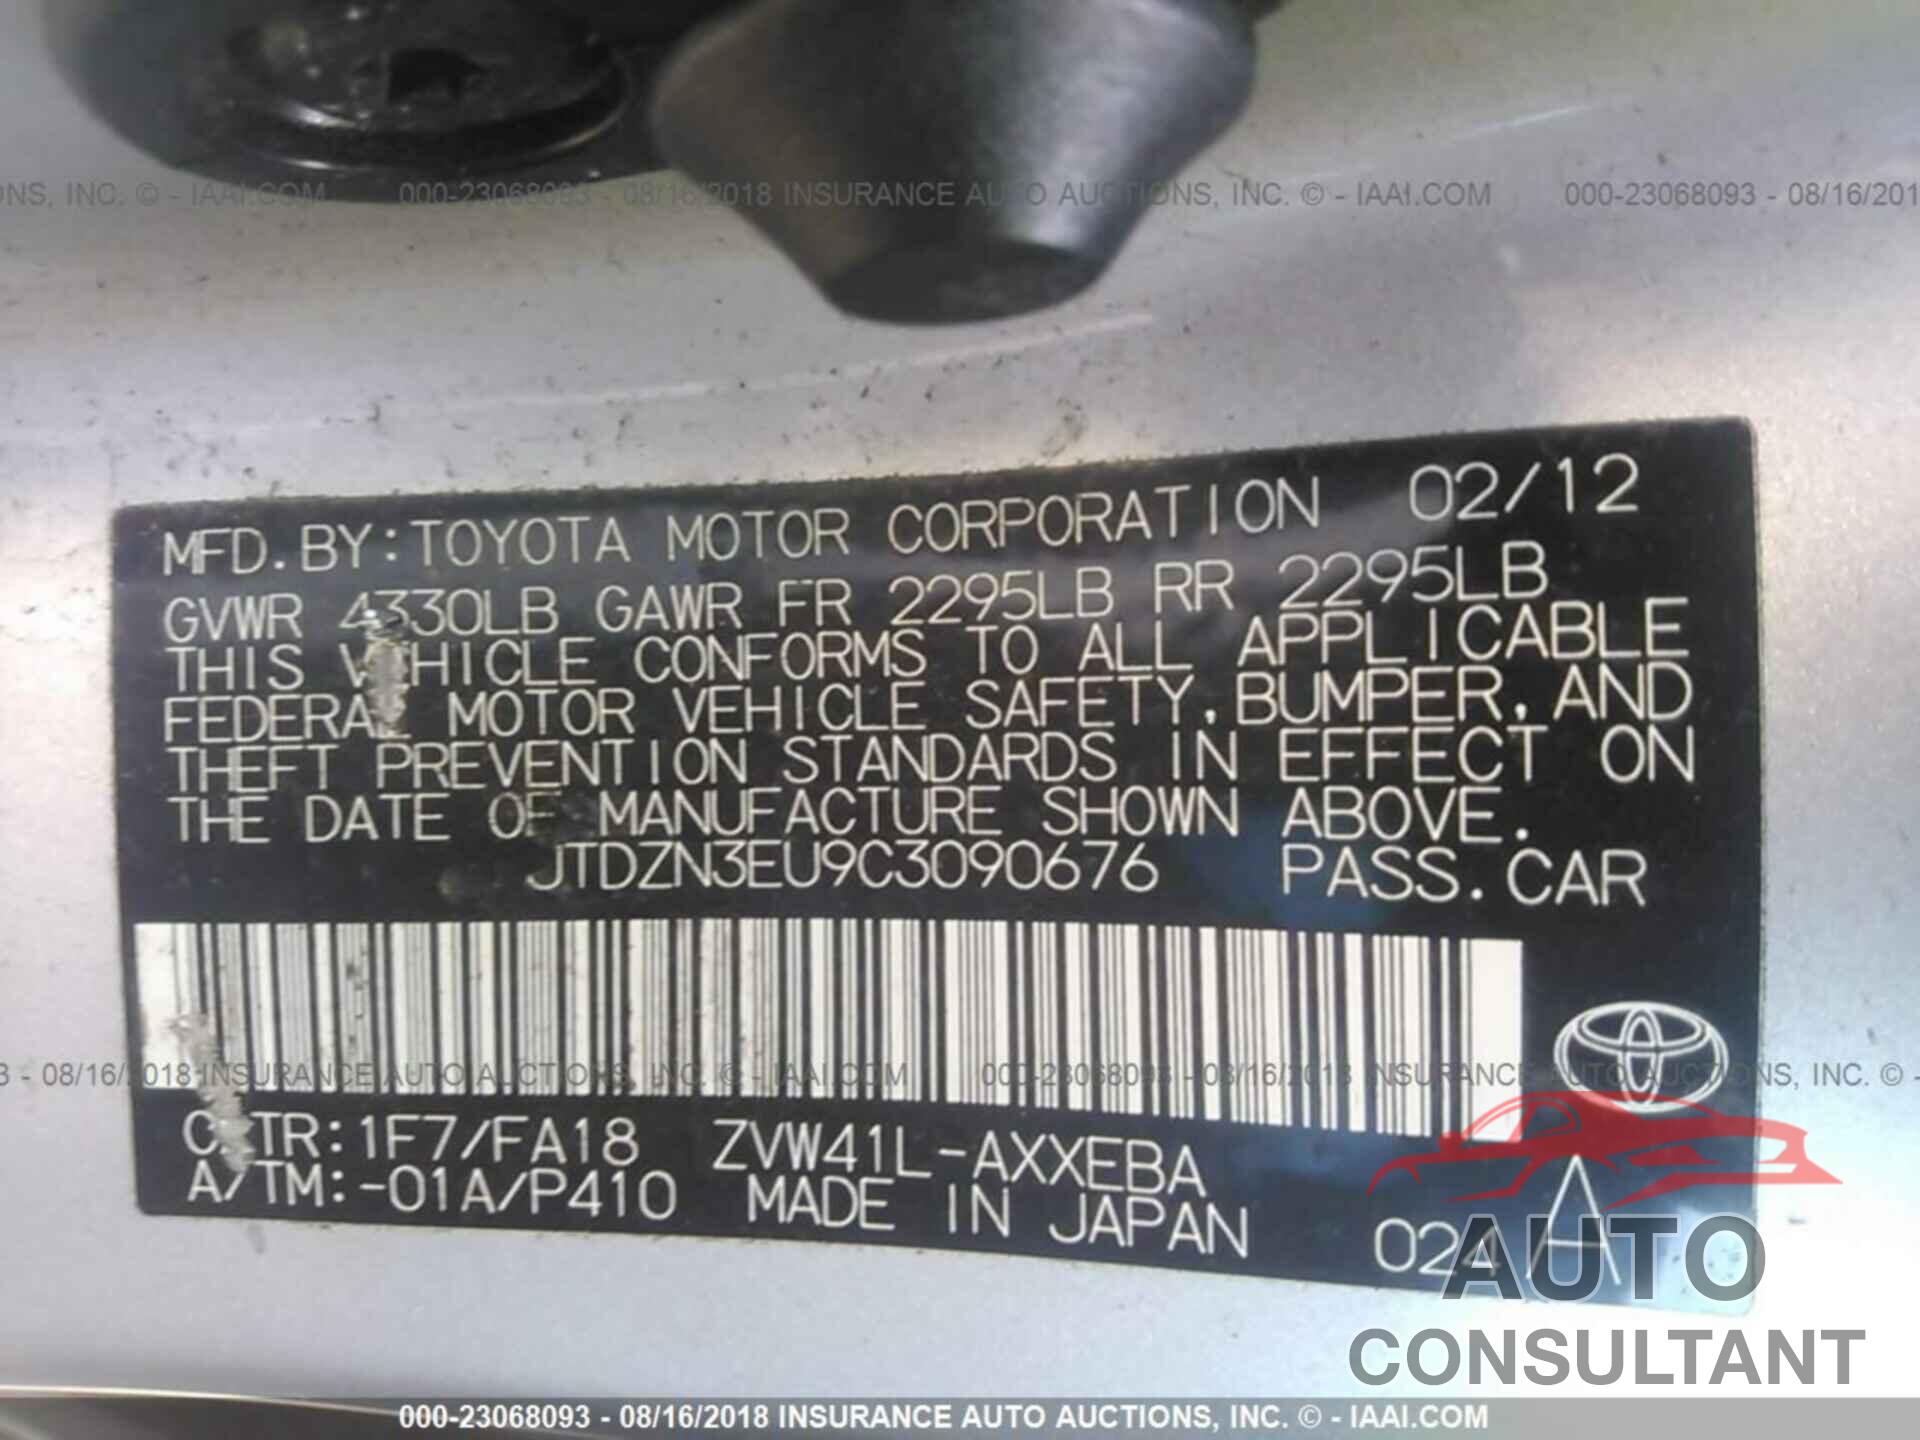 Toyota Prius v 2012 - JTDZN3EU9C3090676